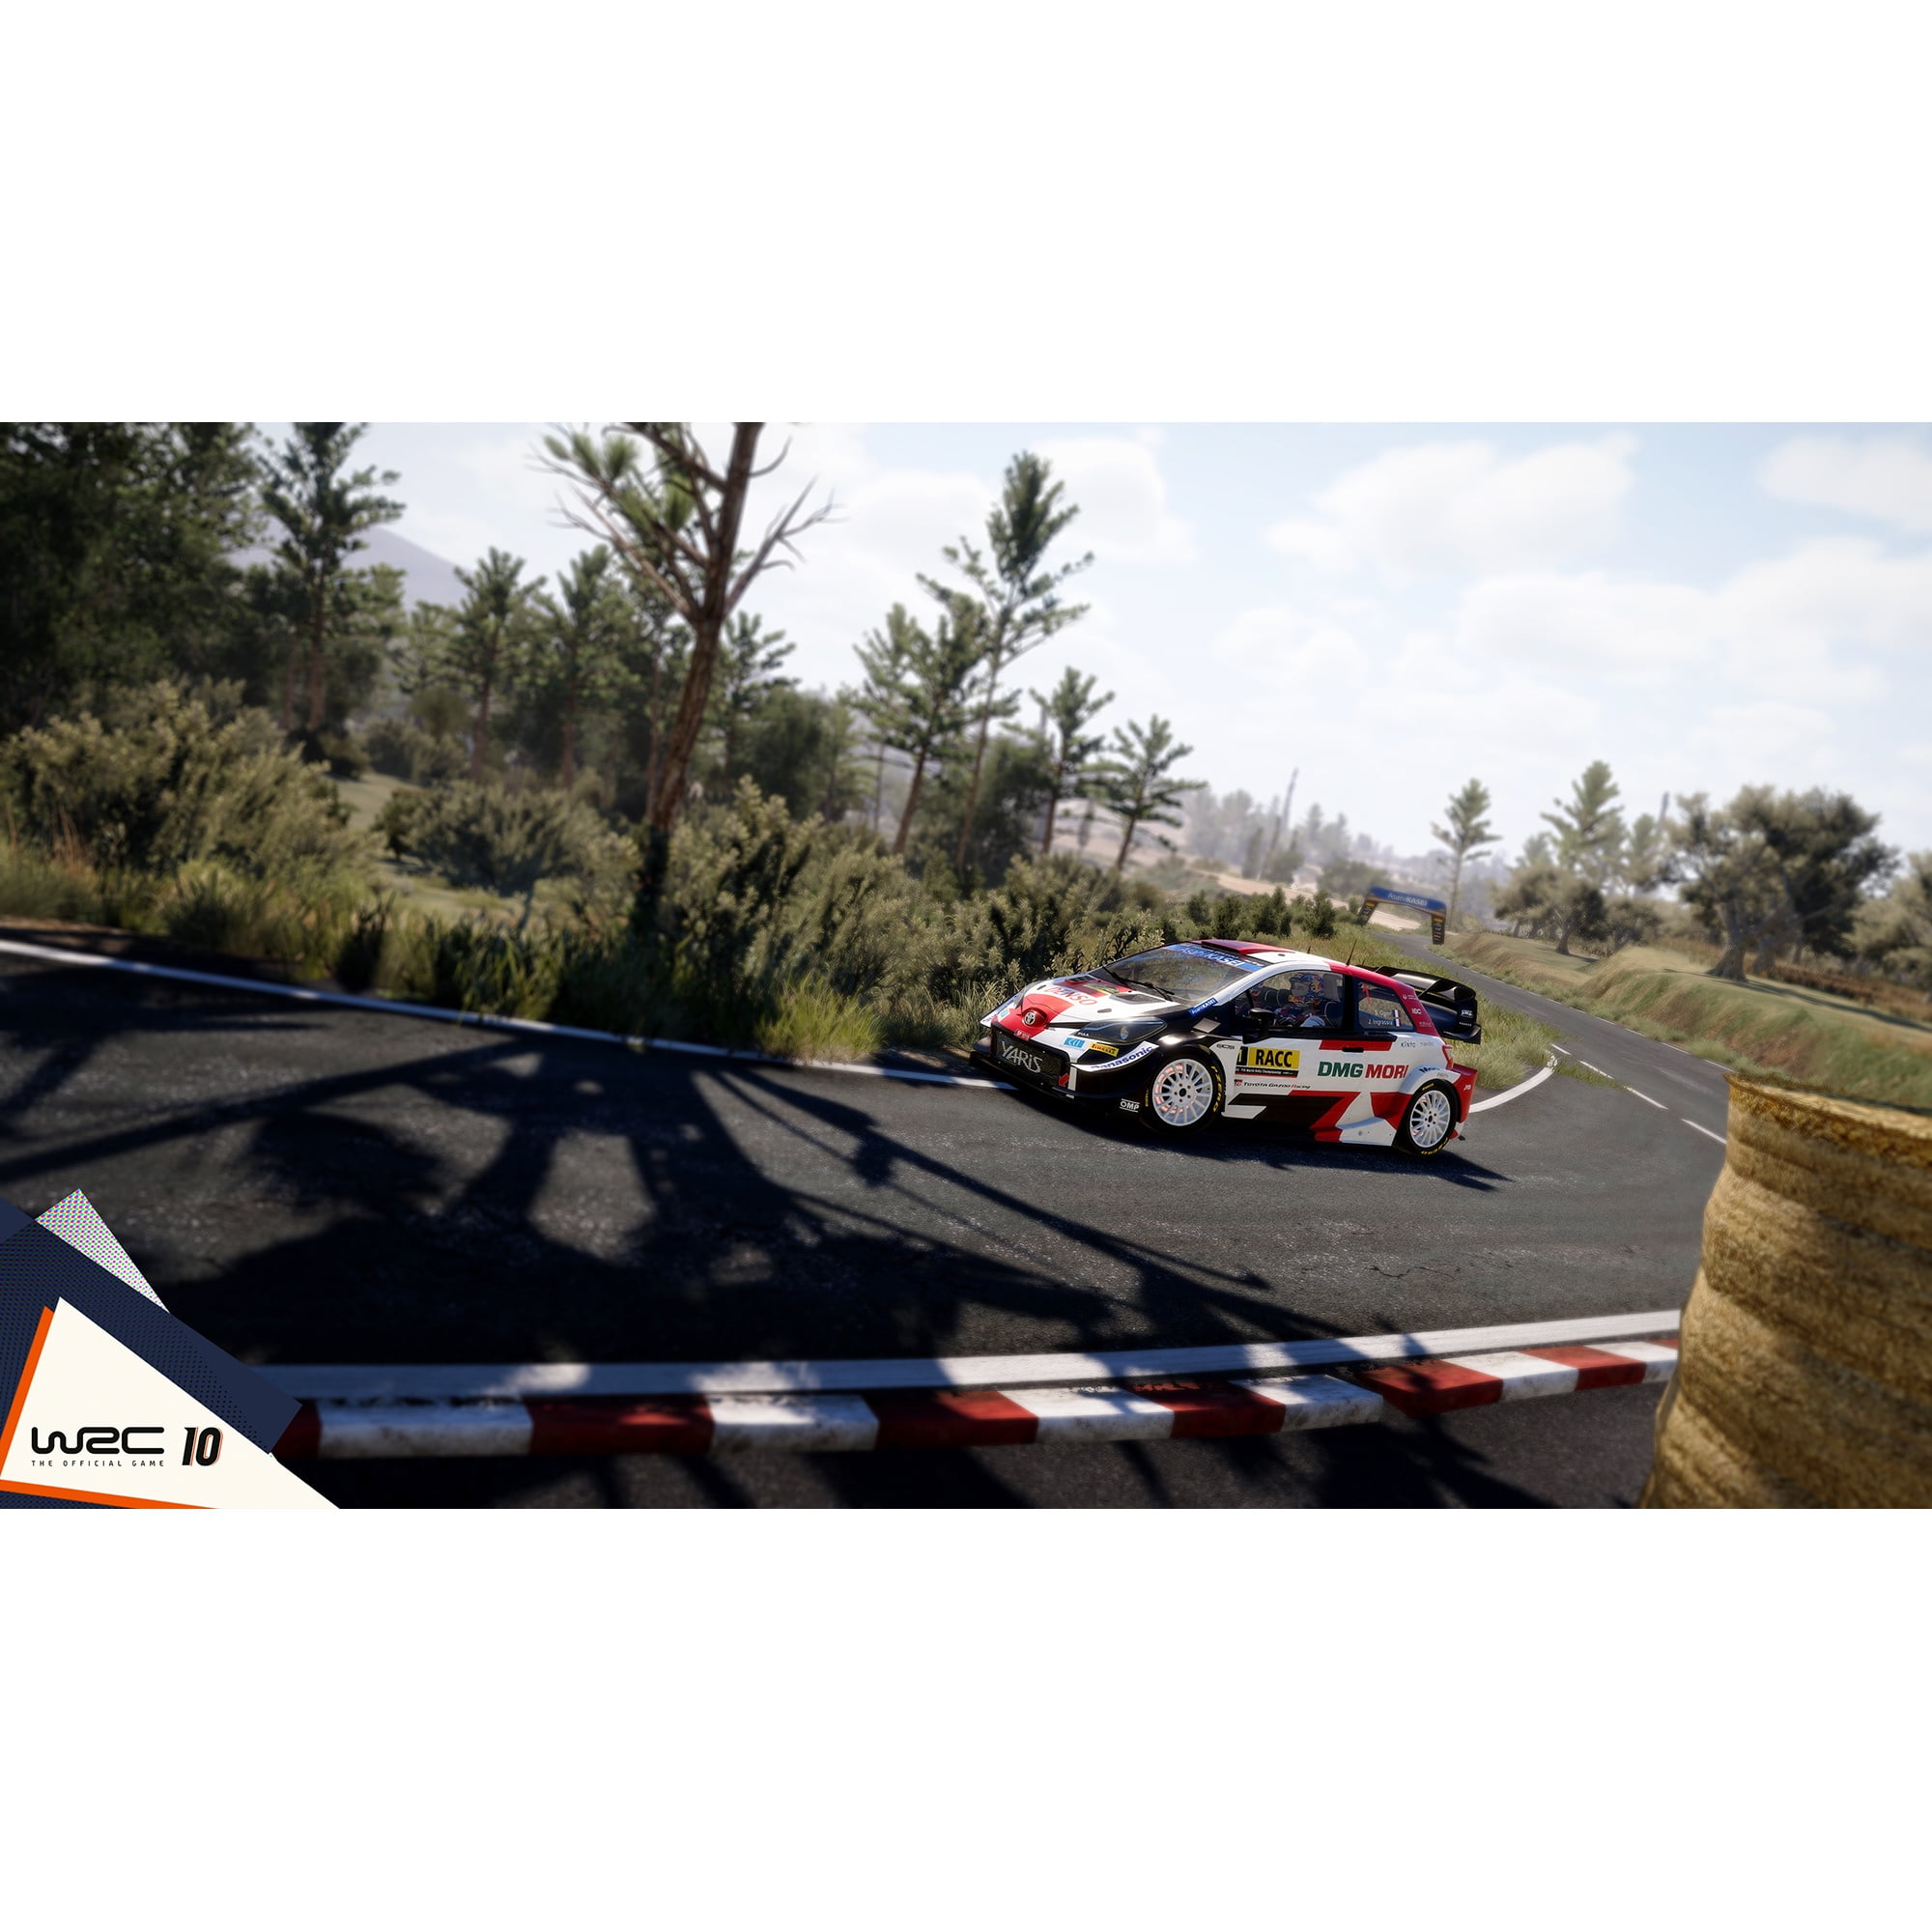 WRC 10 for PlayStation 5